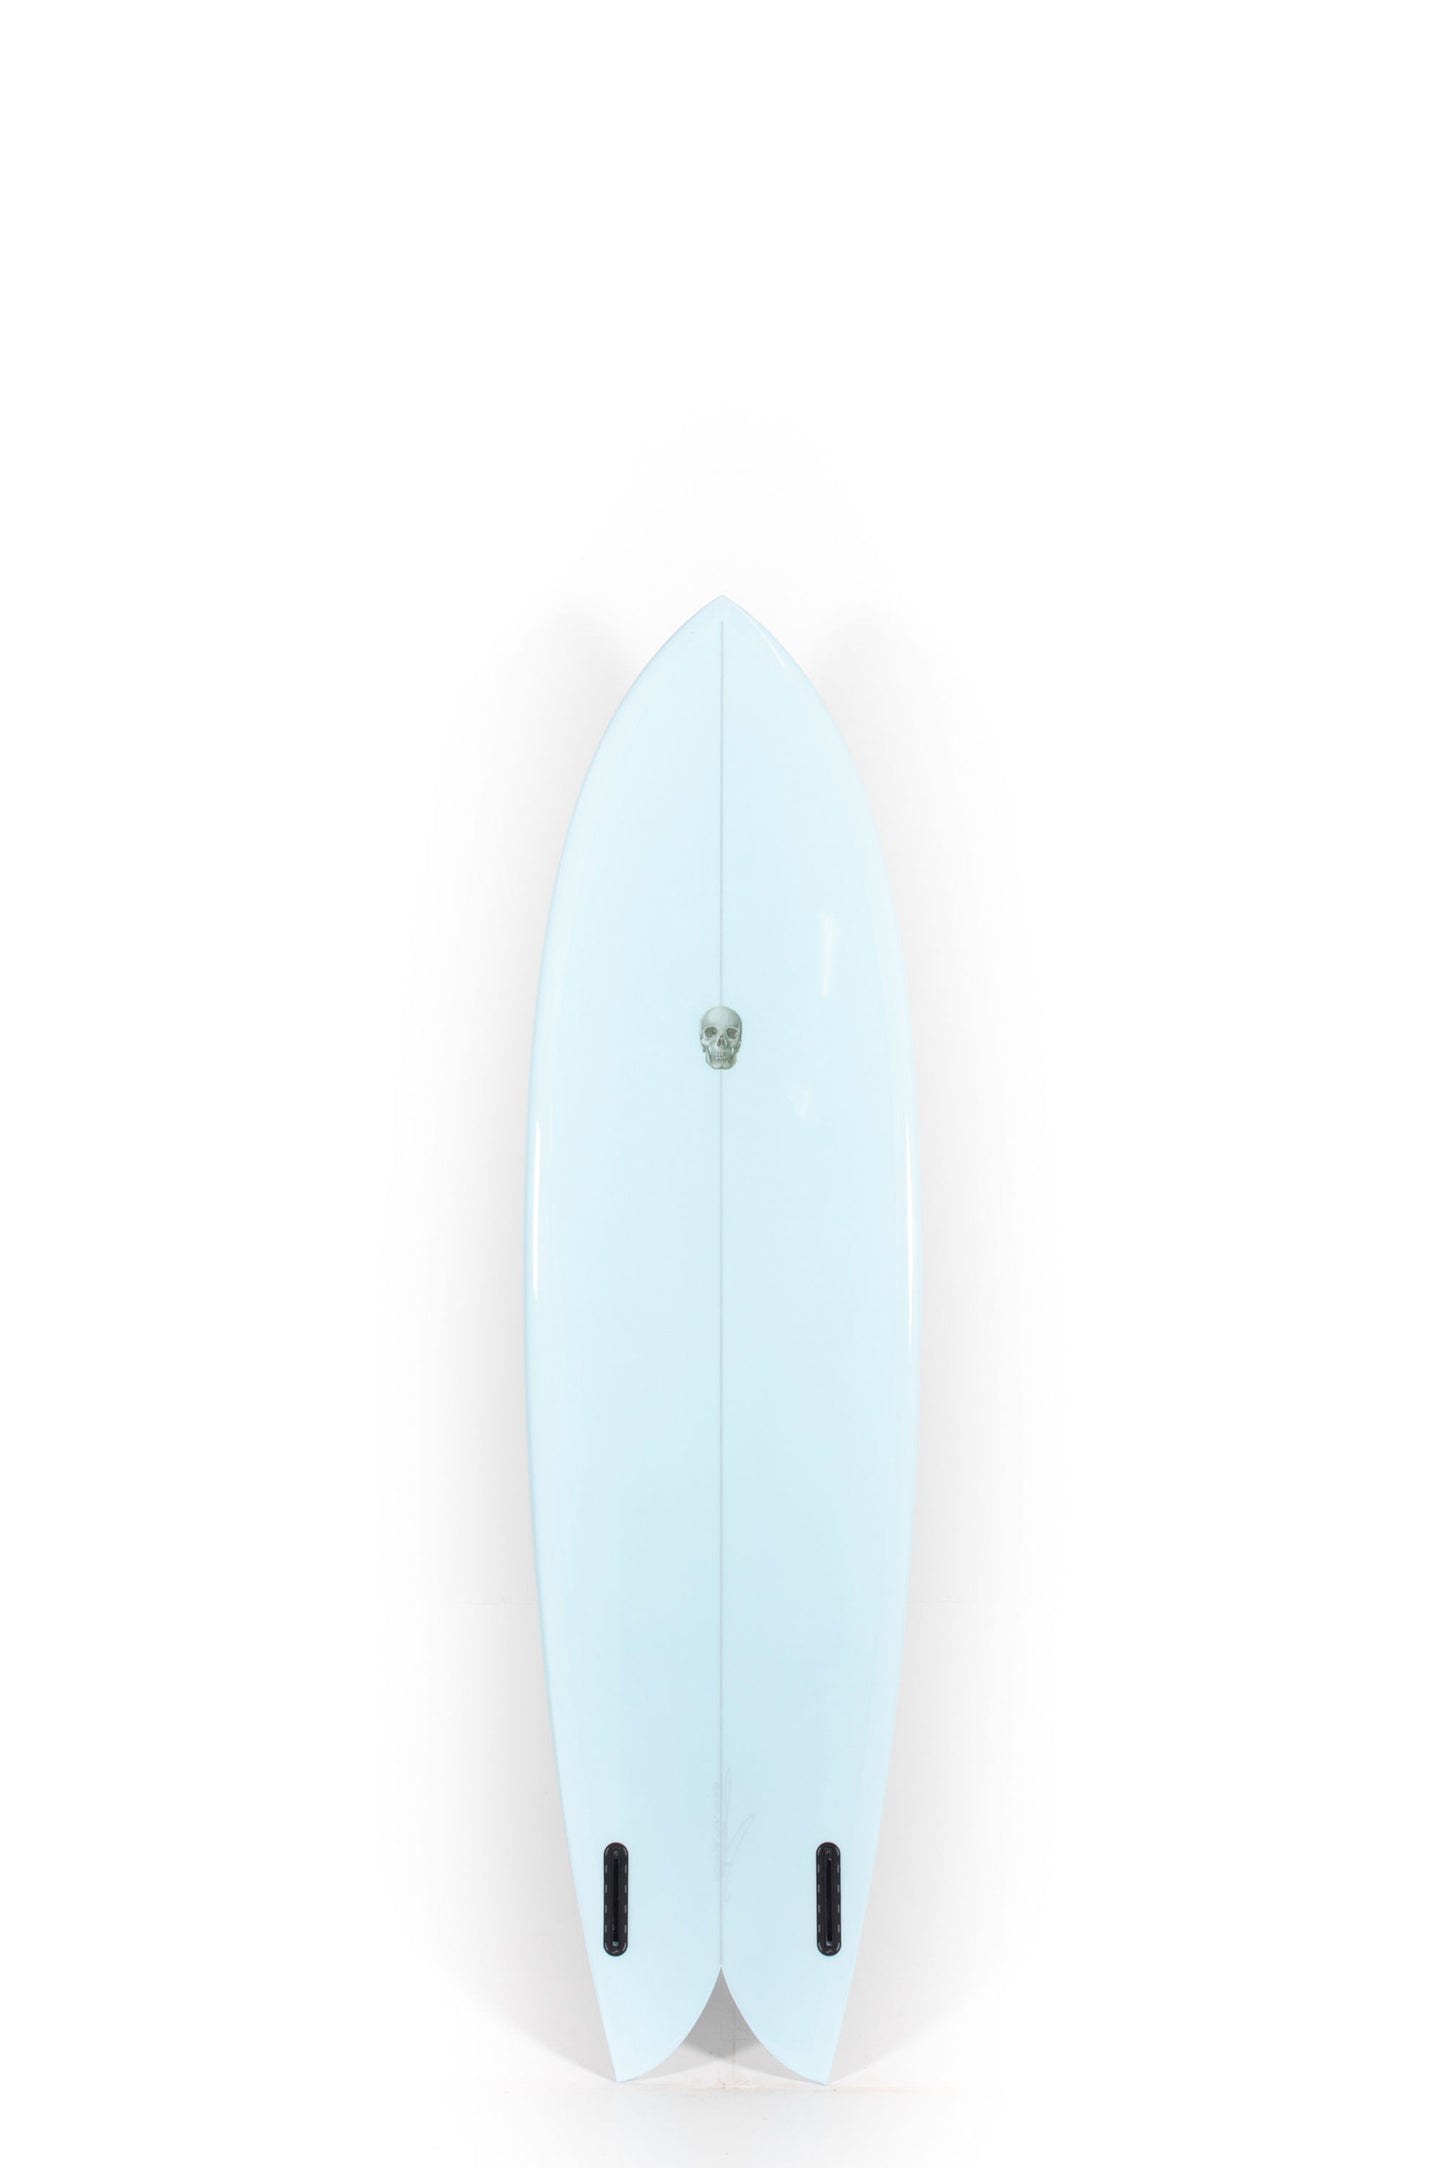 Pukas Surf Shop - Christenson Surfboards - LONG PHISH - 6'8" x 20 3/4 x 2 9/16 - CX03031